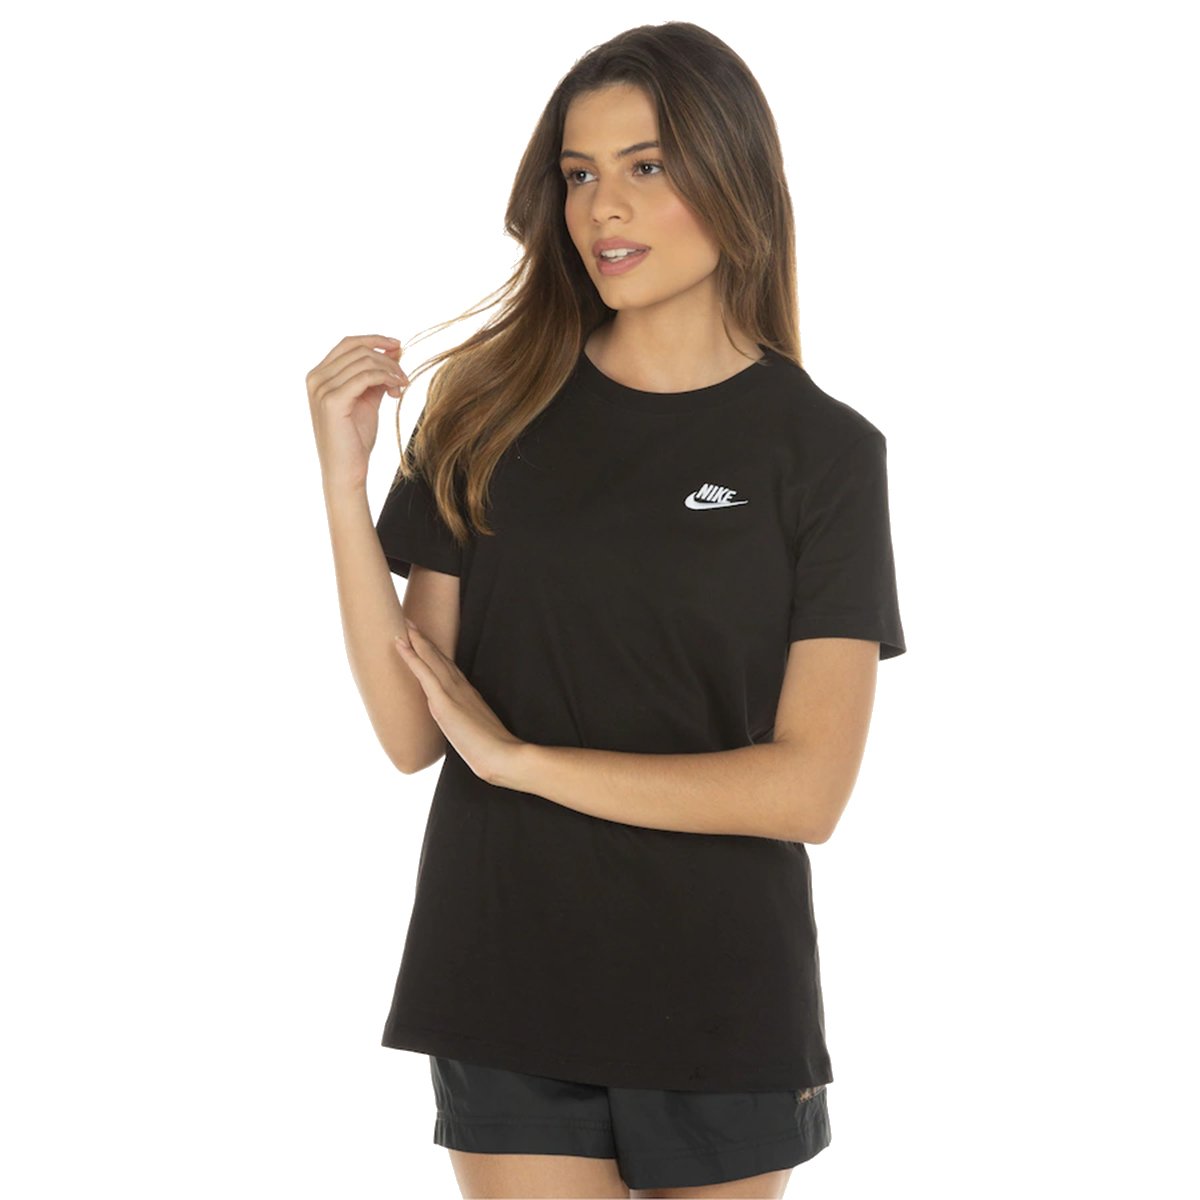 NIKE - Camiseta negra DN2393 010 Mujer